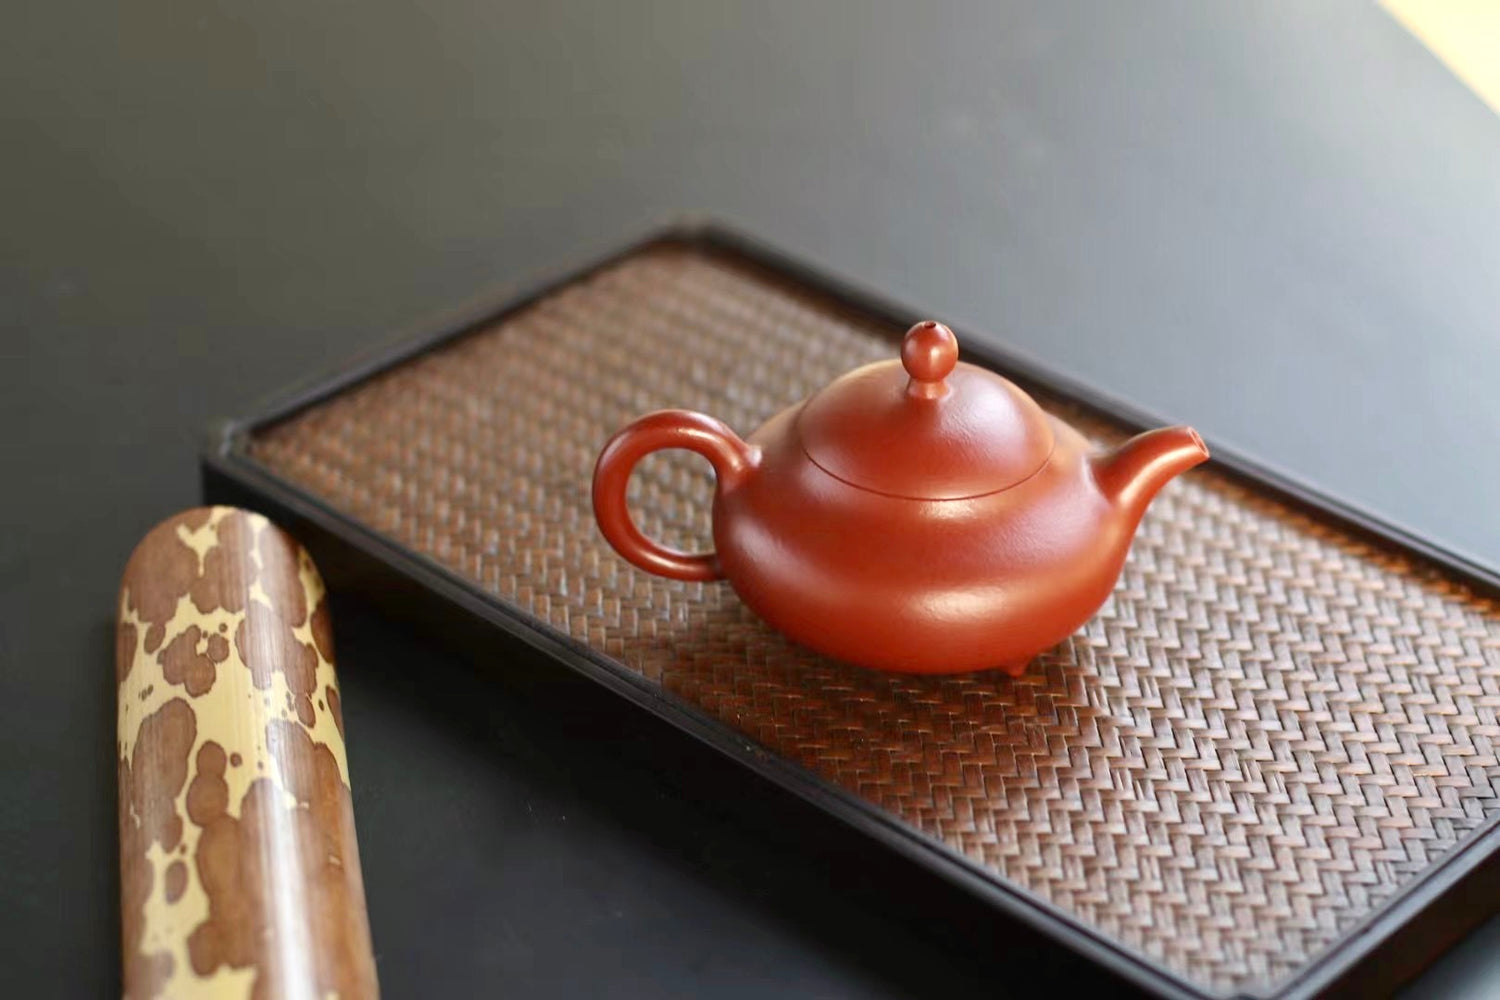 FatBat Clay - Yixing Zisha Teaware